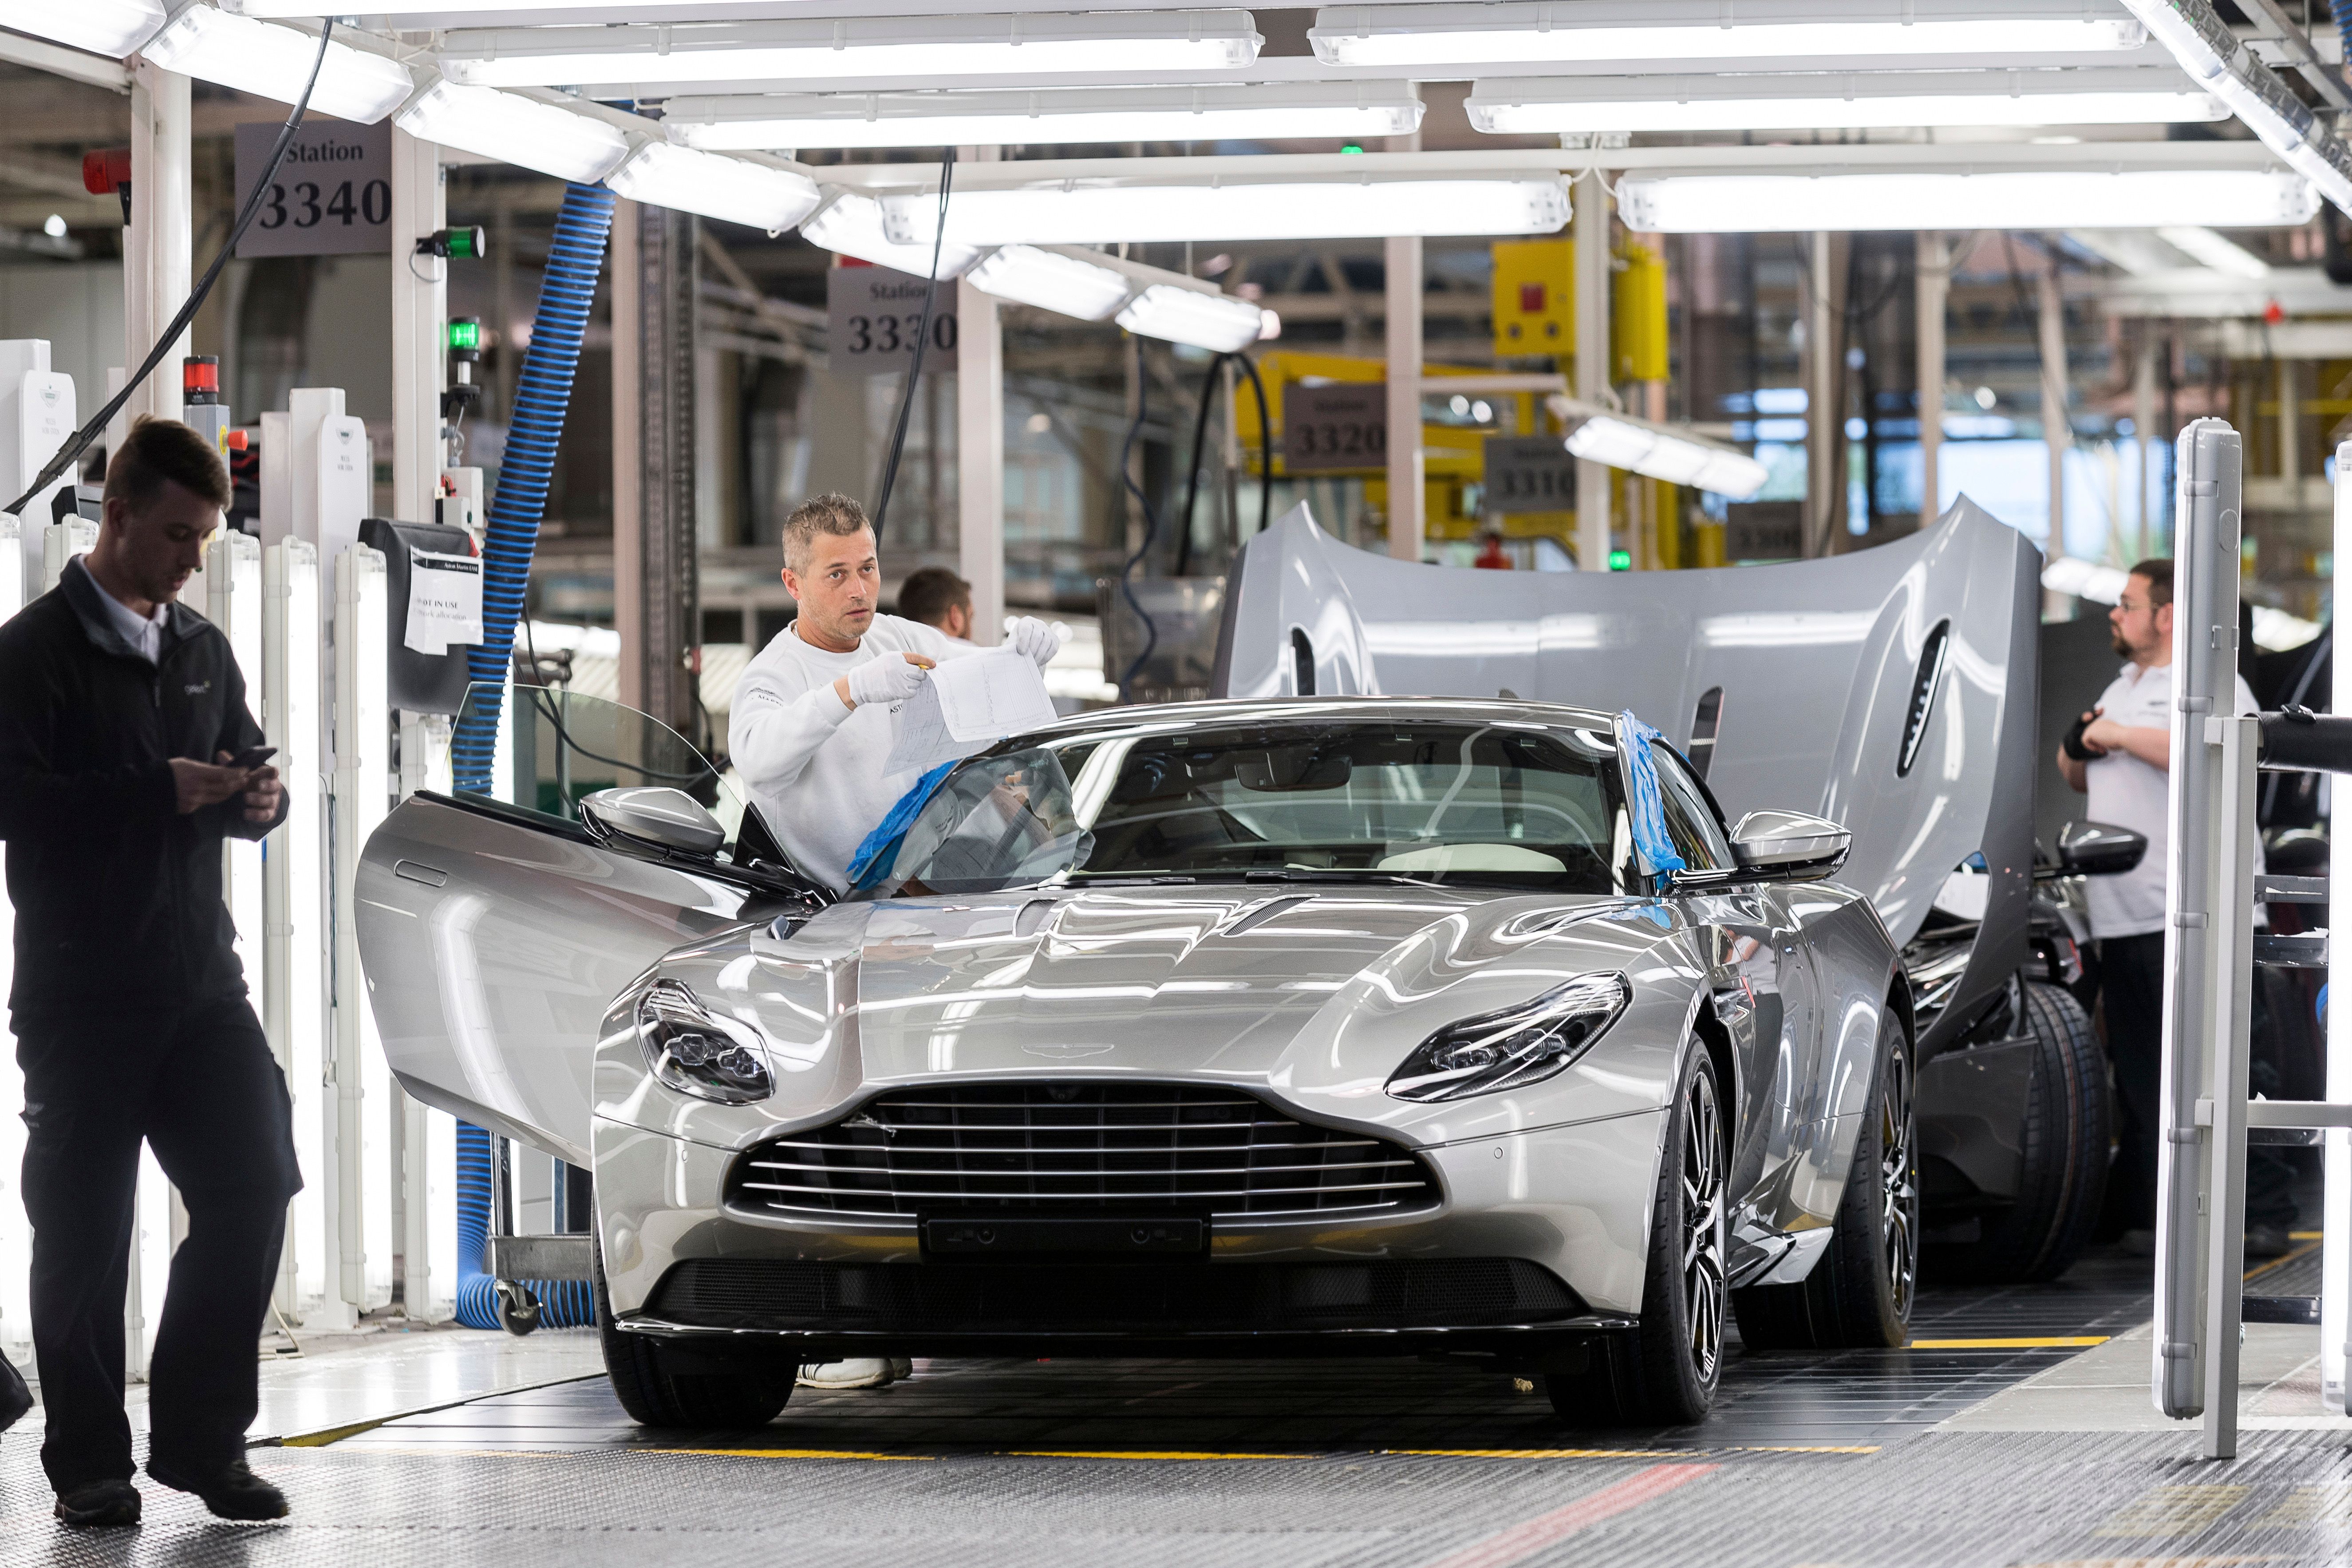 Aston Martin Gaydon Manfuacturing